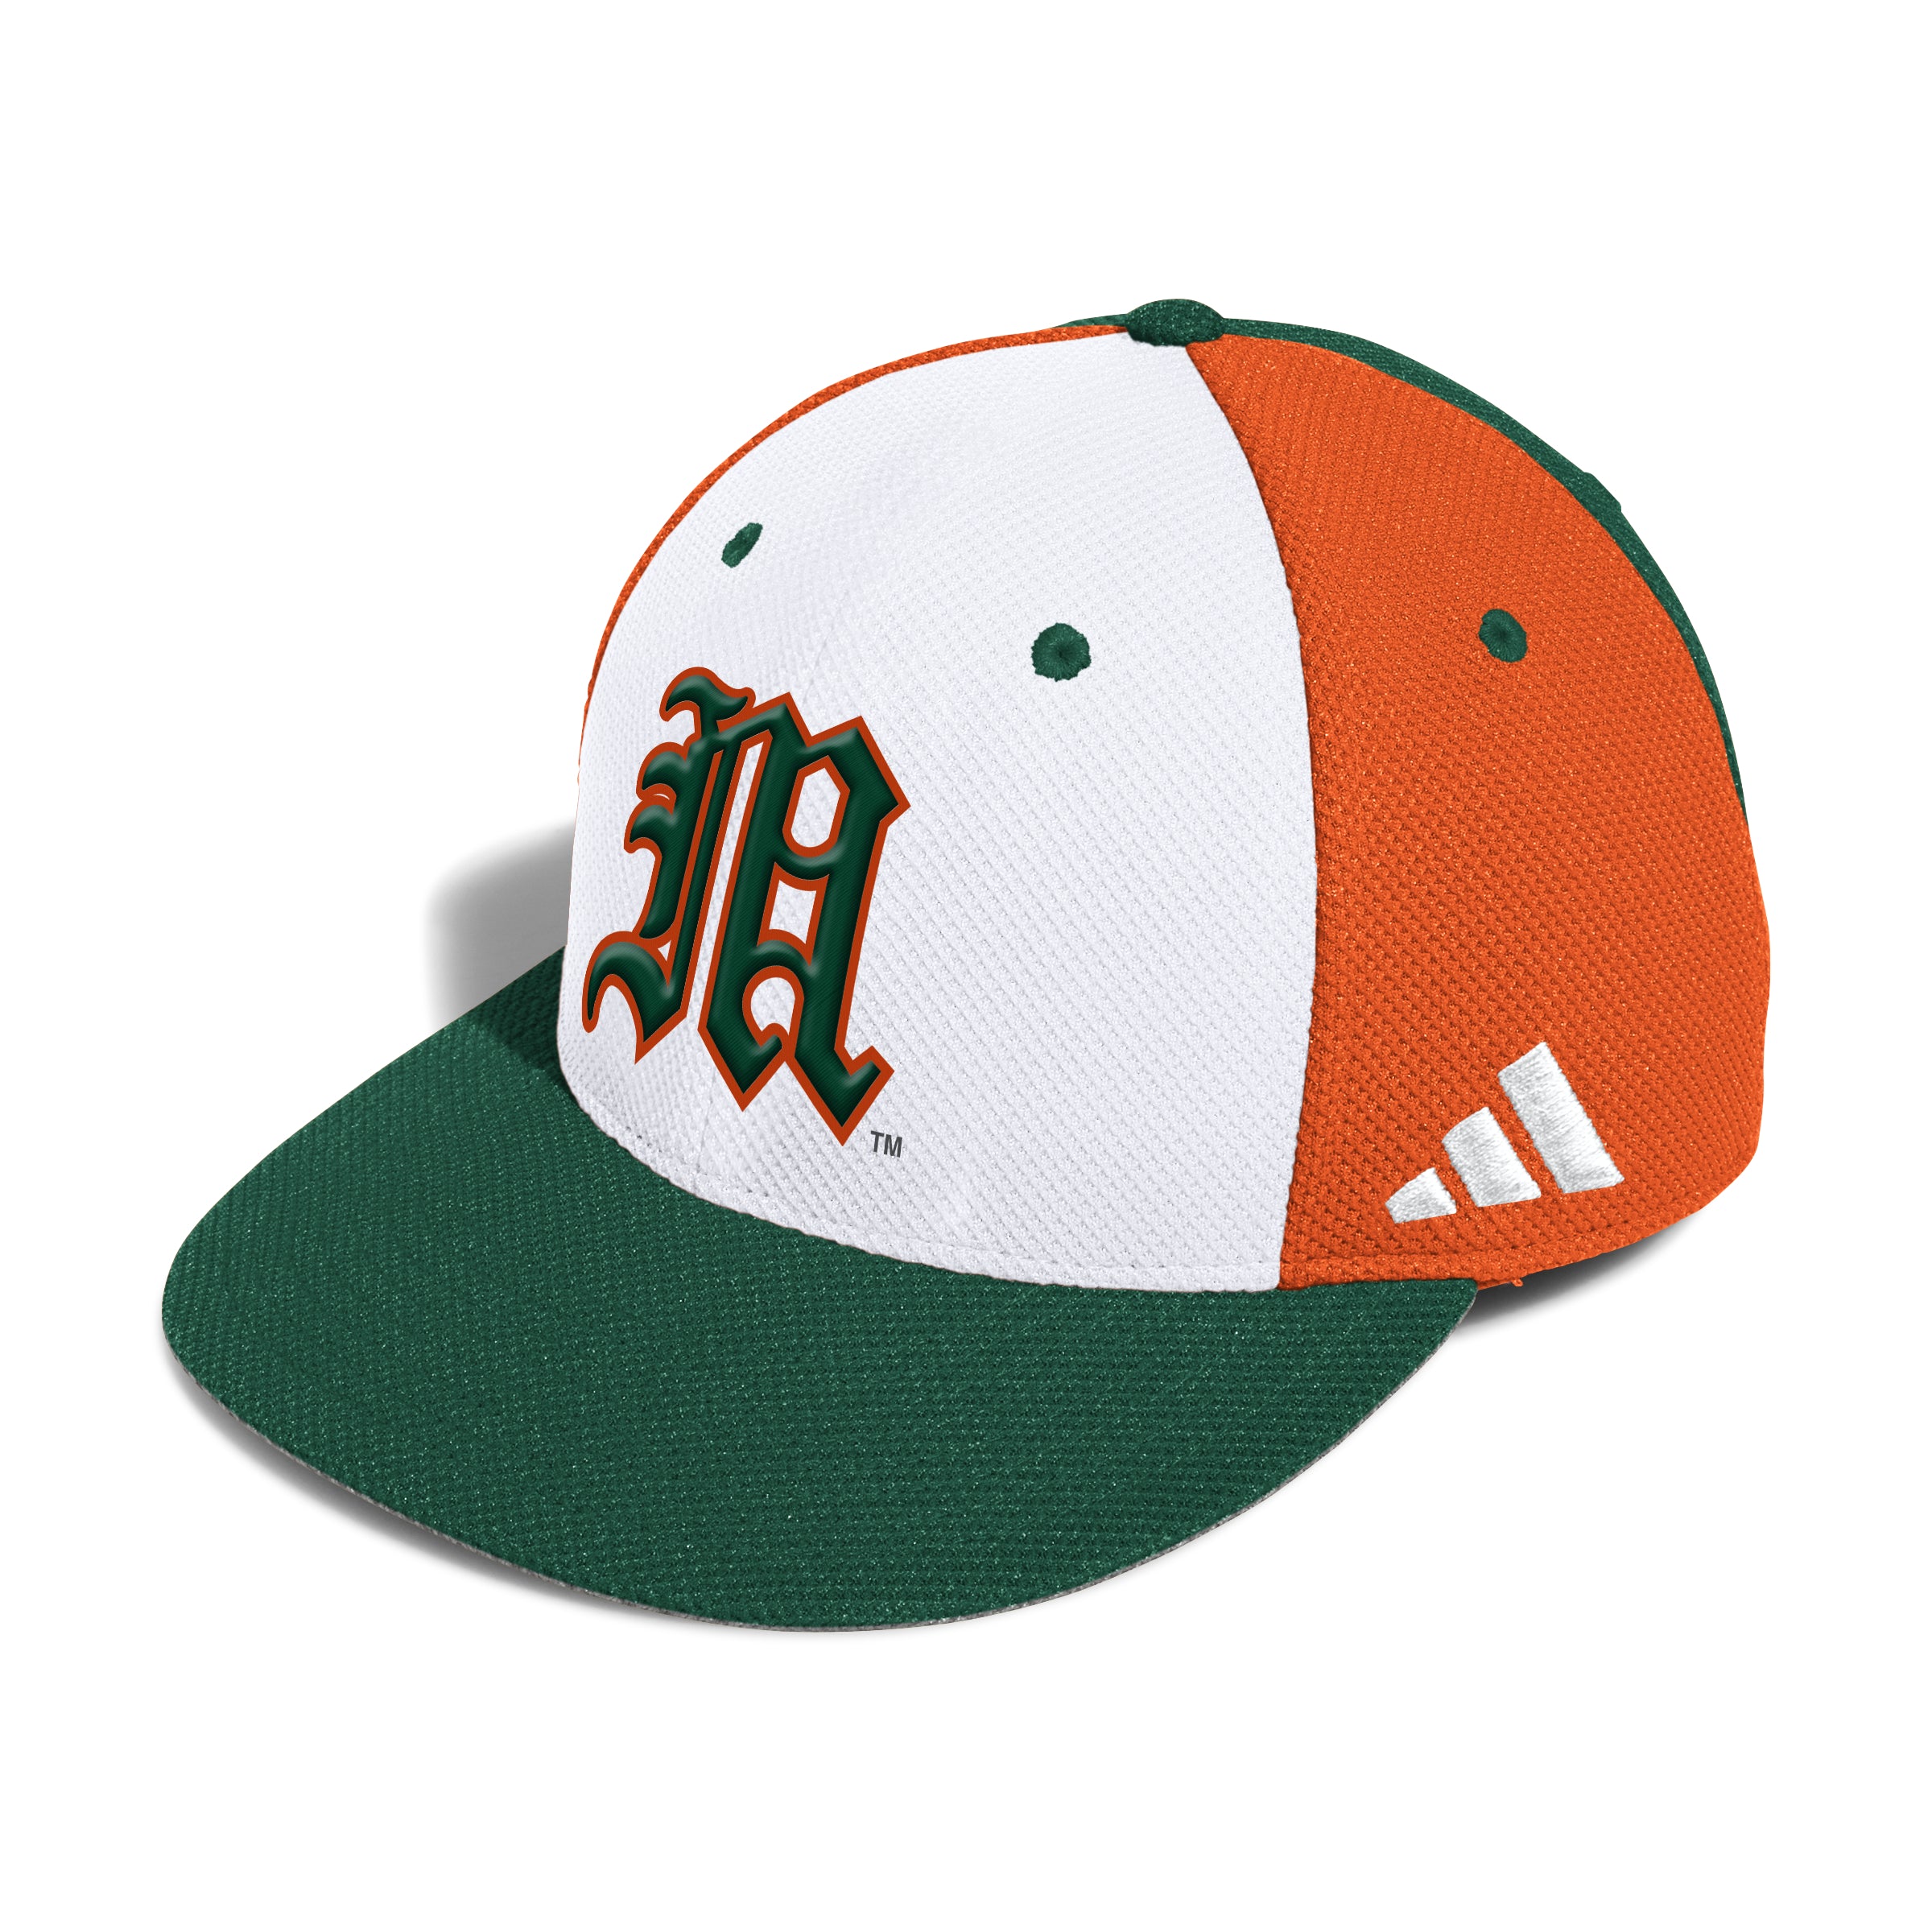 Miami Hurricanes adidas On Field Old English M Mesh Baseball Cap - Tri-Color